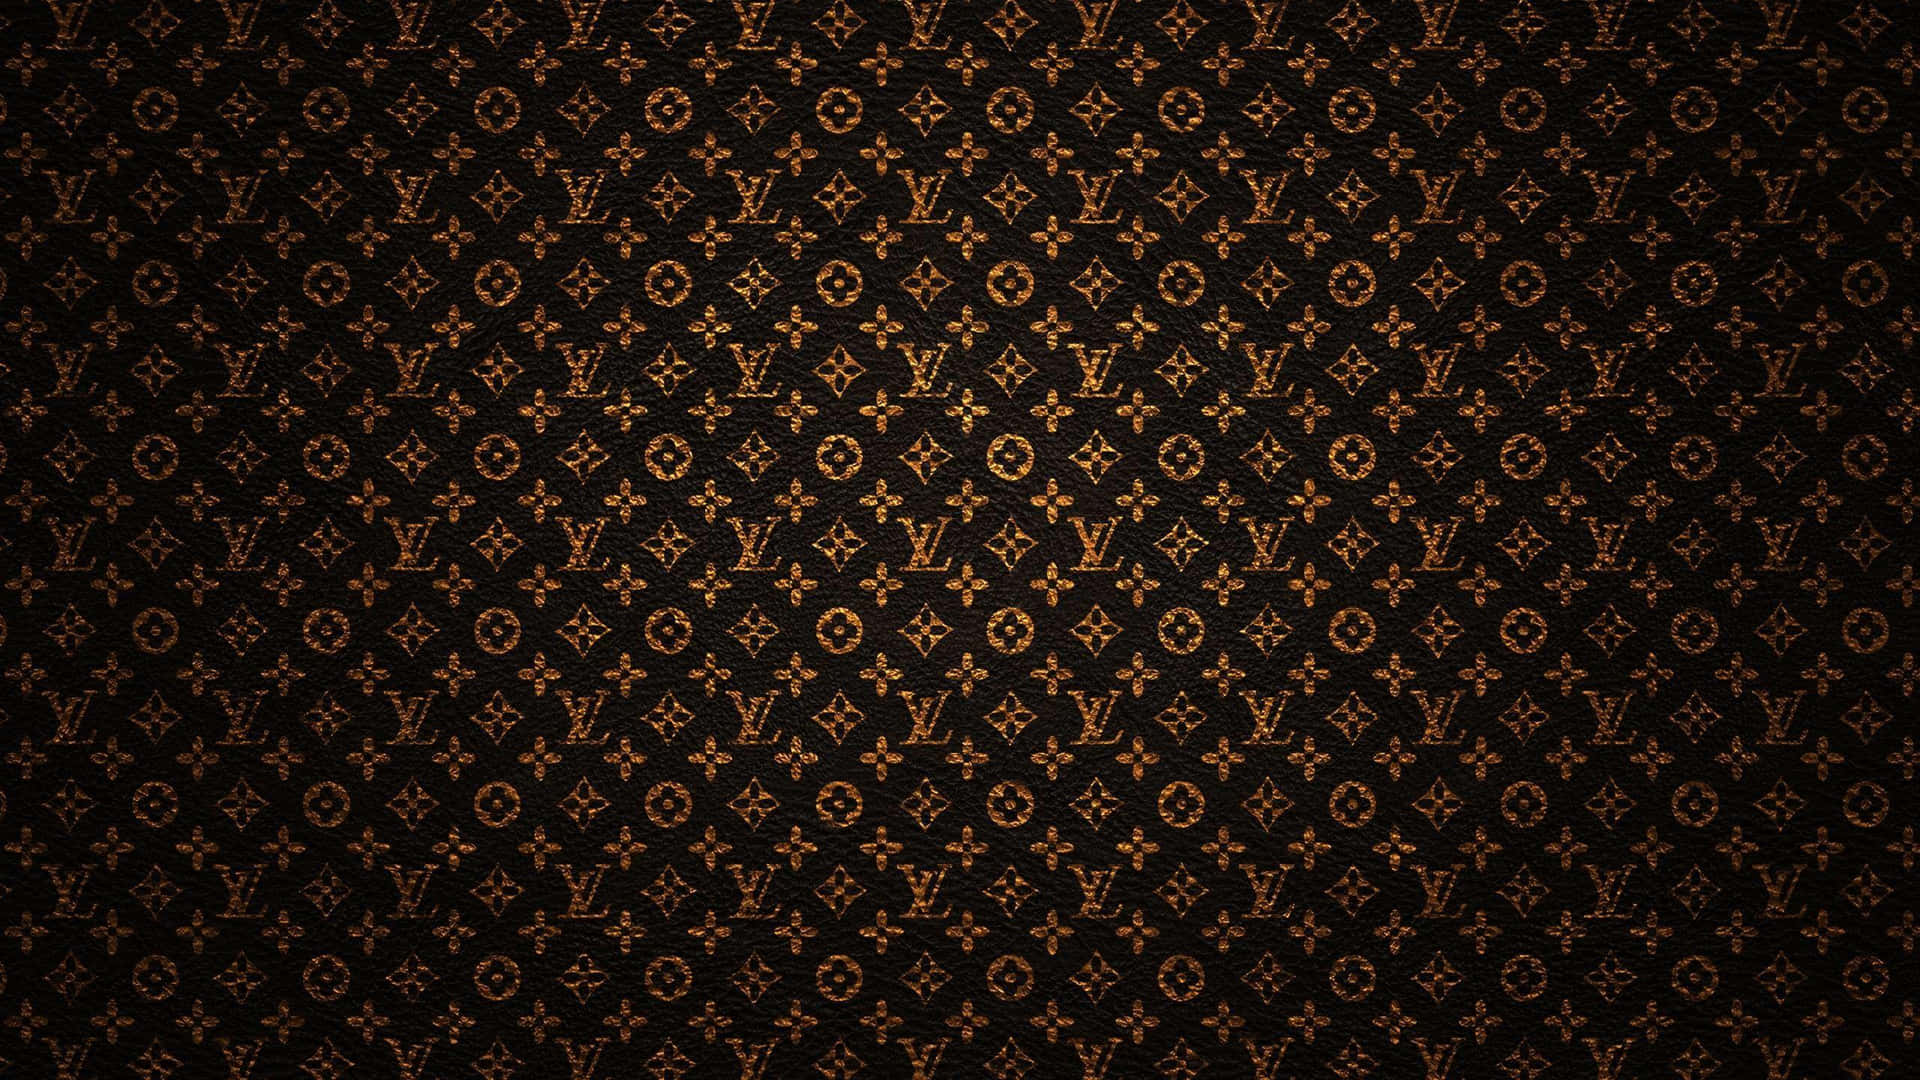 Brauneslouis Vuitton Monogramm Muster Wallpaper